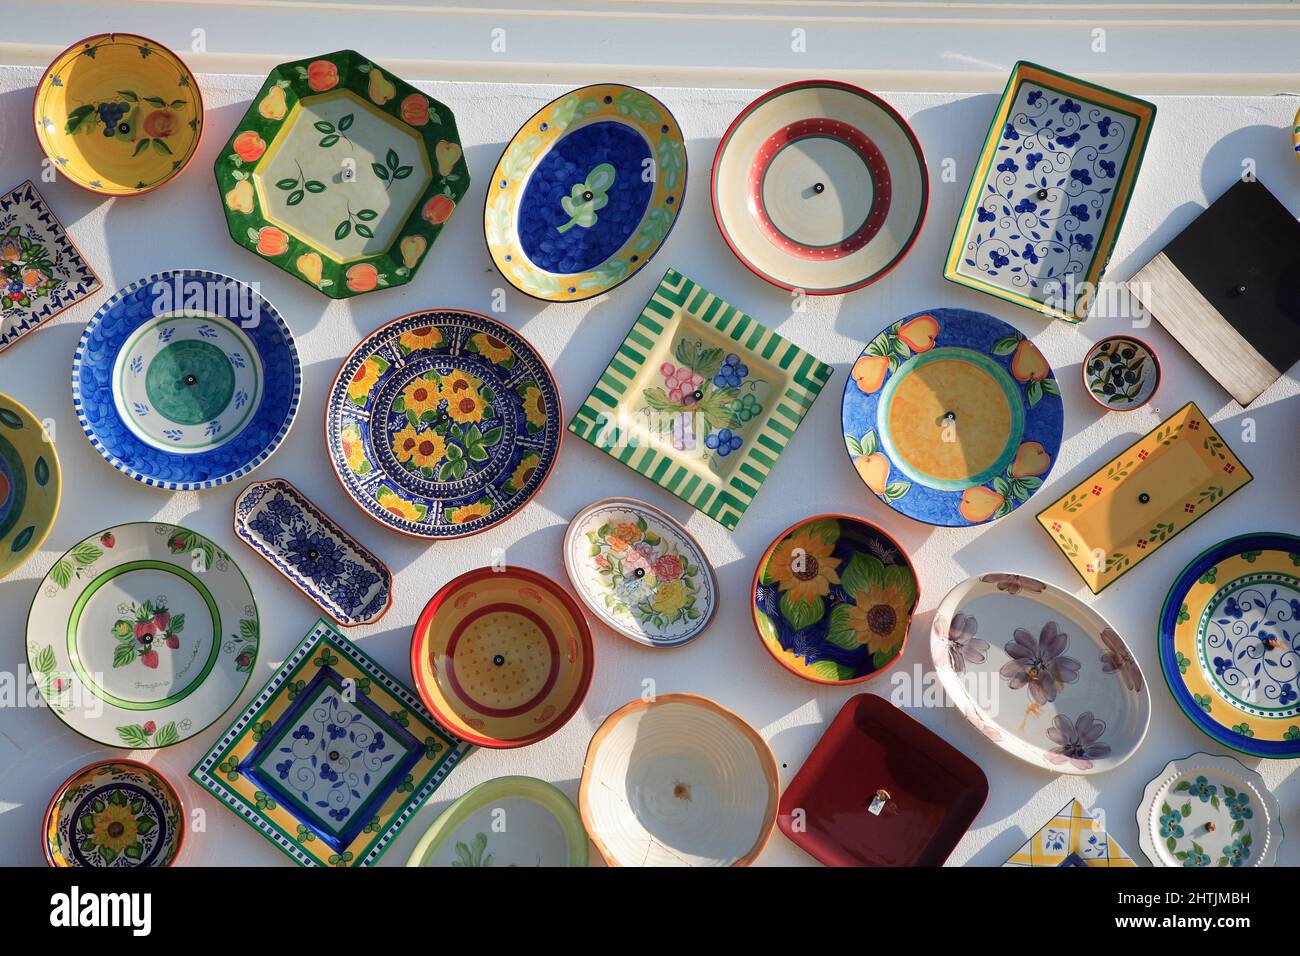 Keramikhändler, Dekorationsfassade, bei Sagres, Algarve, Portugal, Geschäftsdekoration einer Keramikhändler Foto de stock